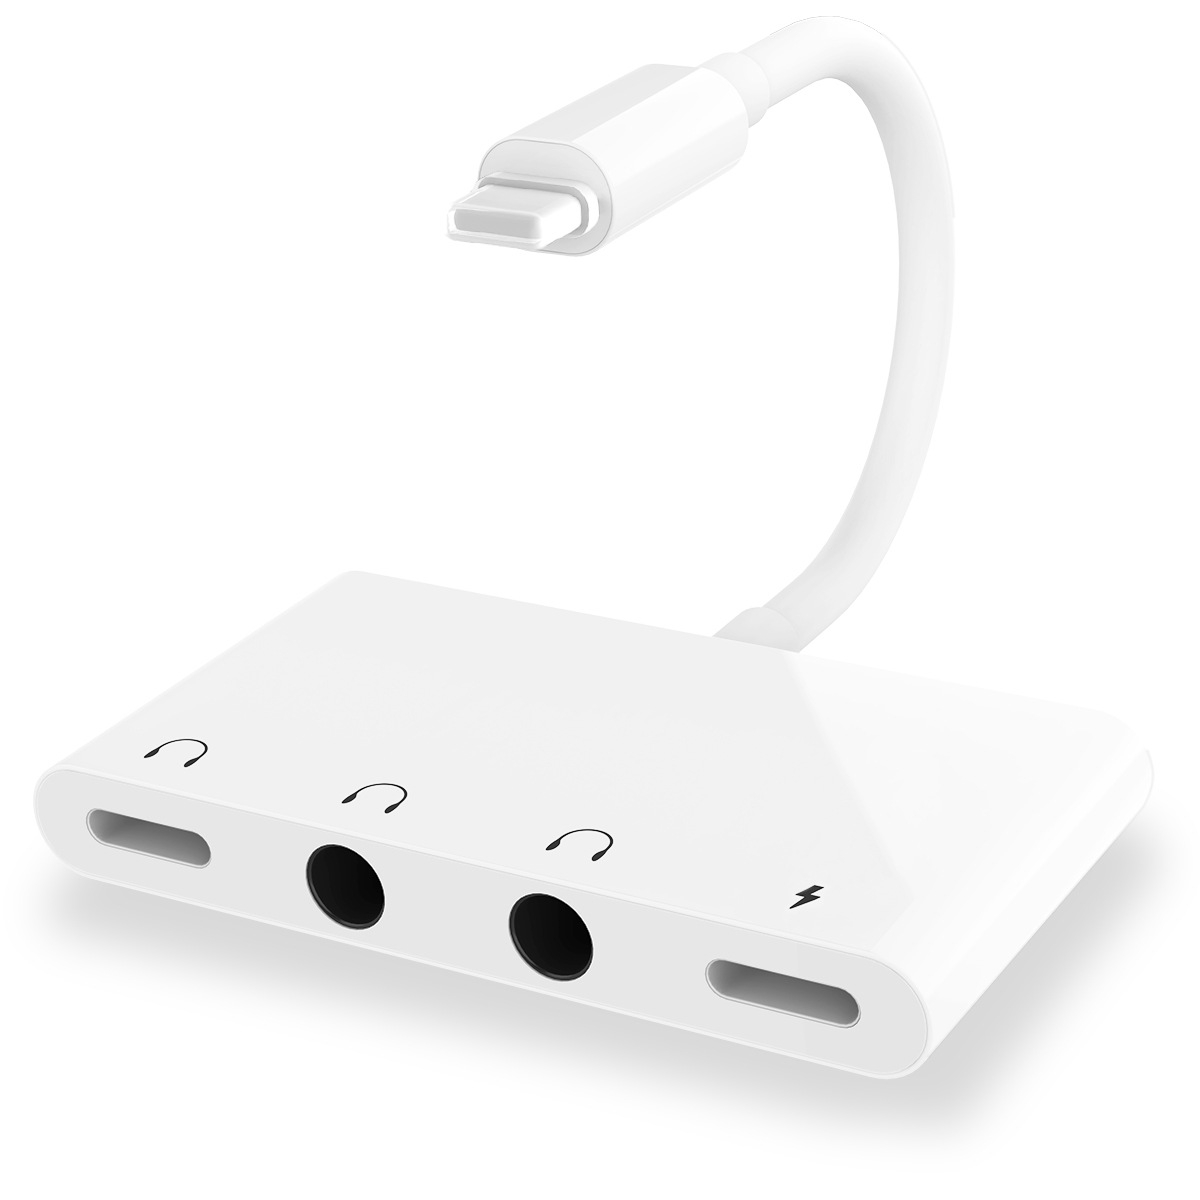 THT-019 USB C to Dual 3.5mm Digital Audio Jack Adapter 4 in 1 Headphone Audio Adapter for Google Pixel2 USB-C Charging Adapter Splitter